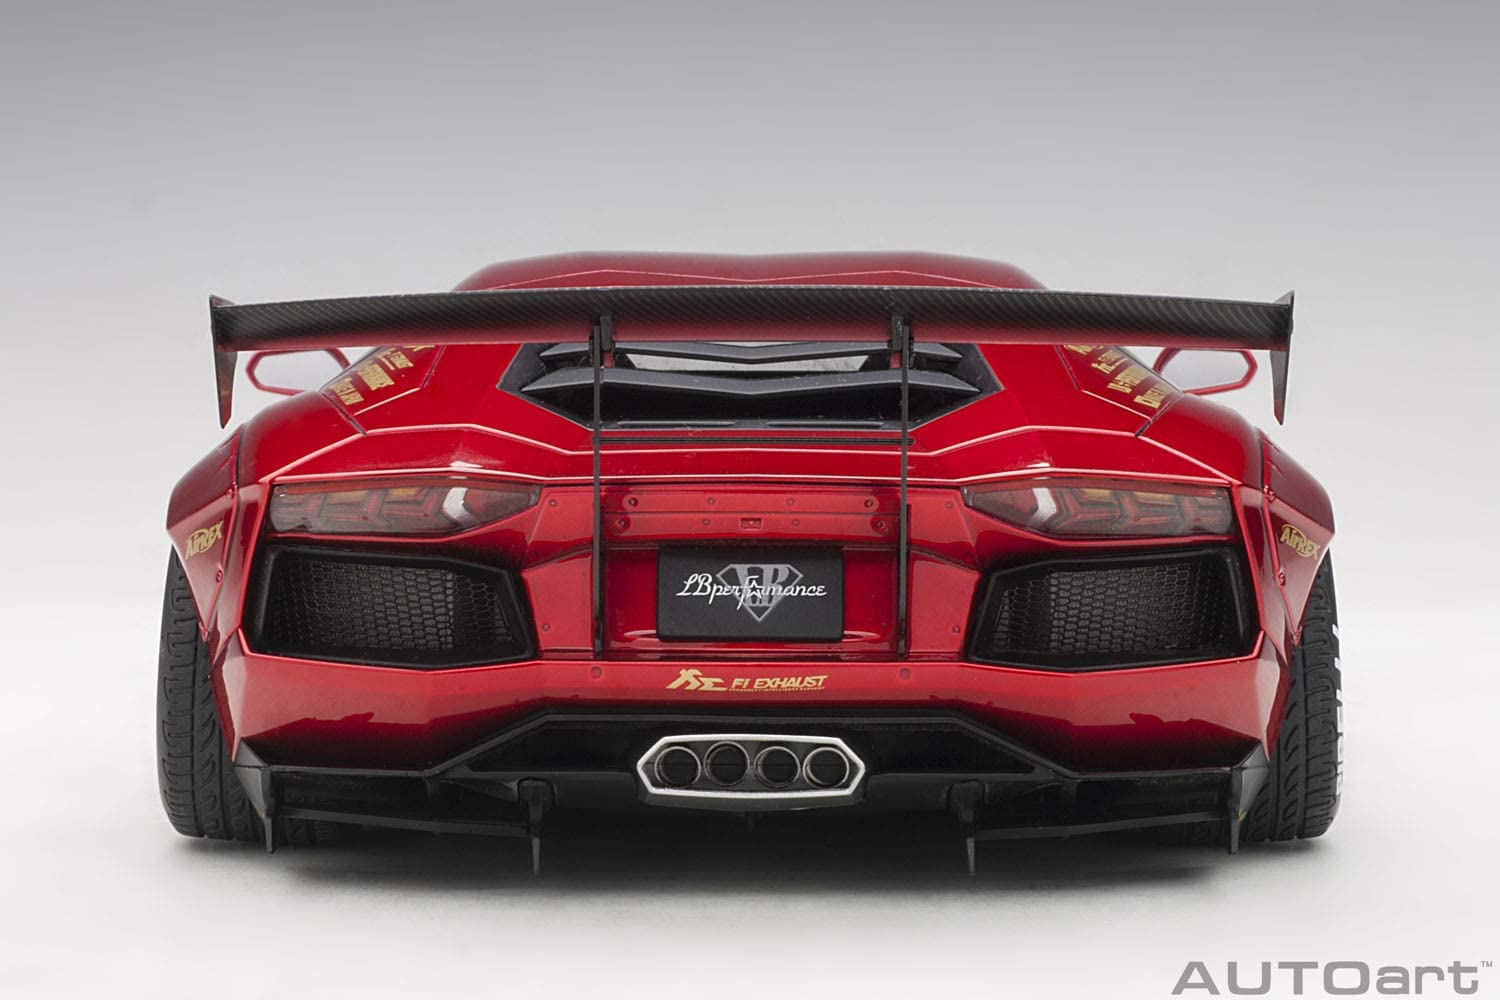 Finished product AUTOart 1/18 LB-WORKS Lamborghini Aventador  Metallic red 2371 画像5